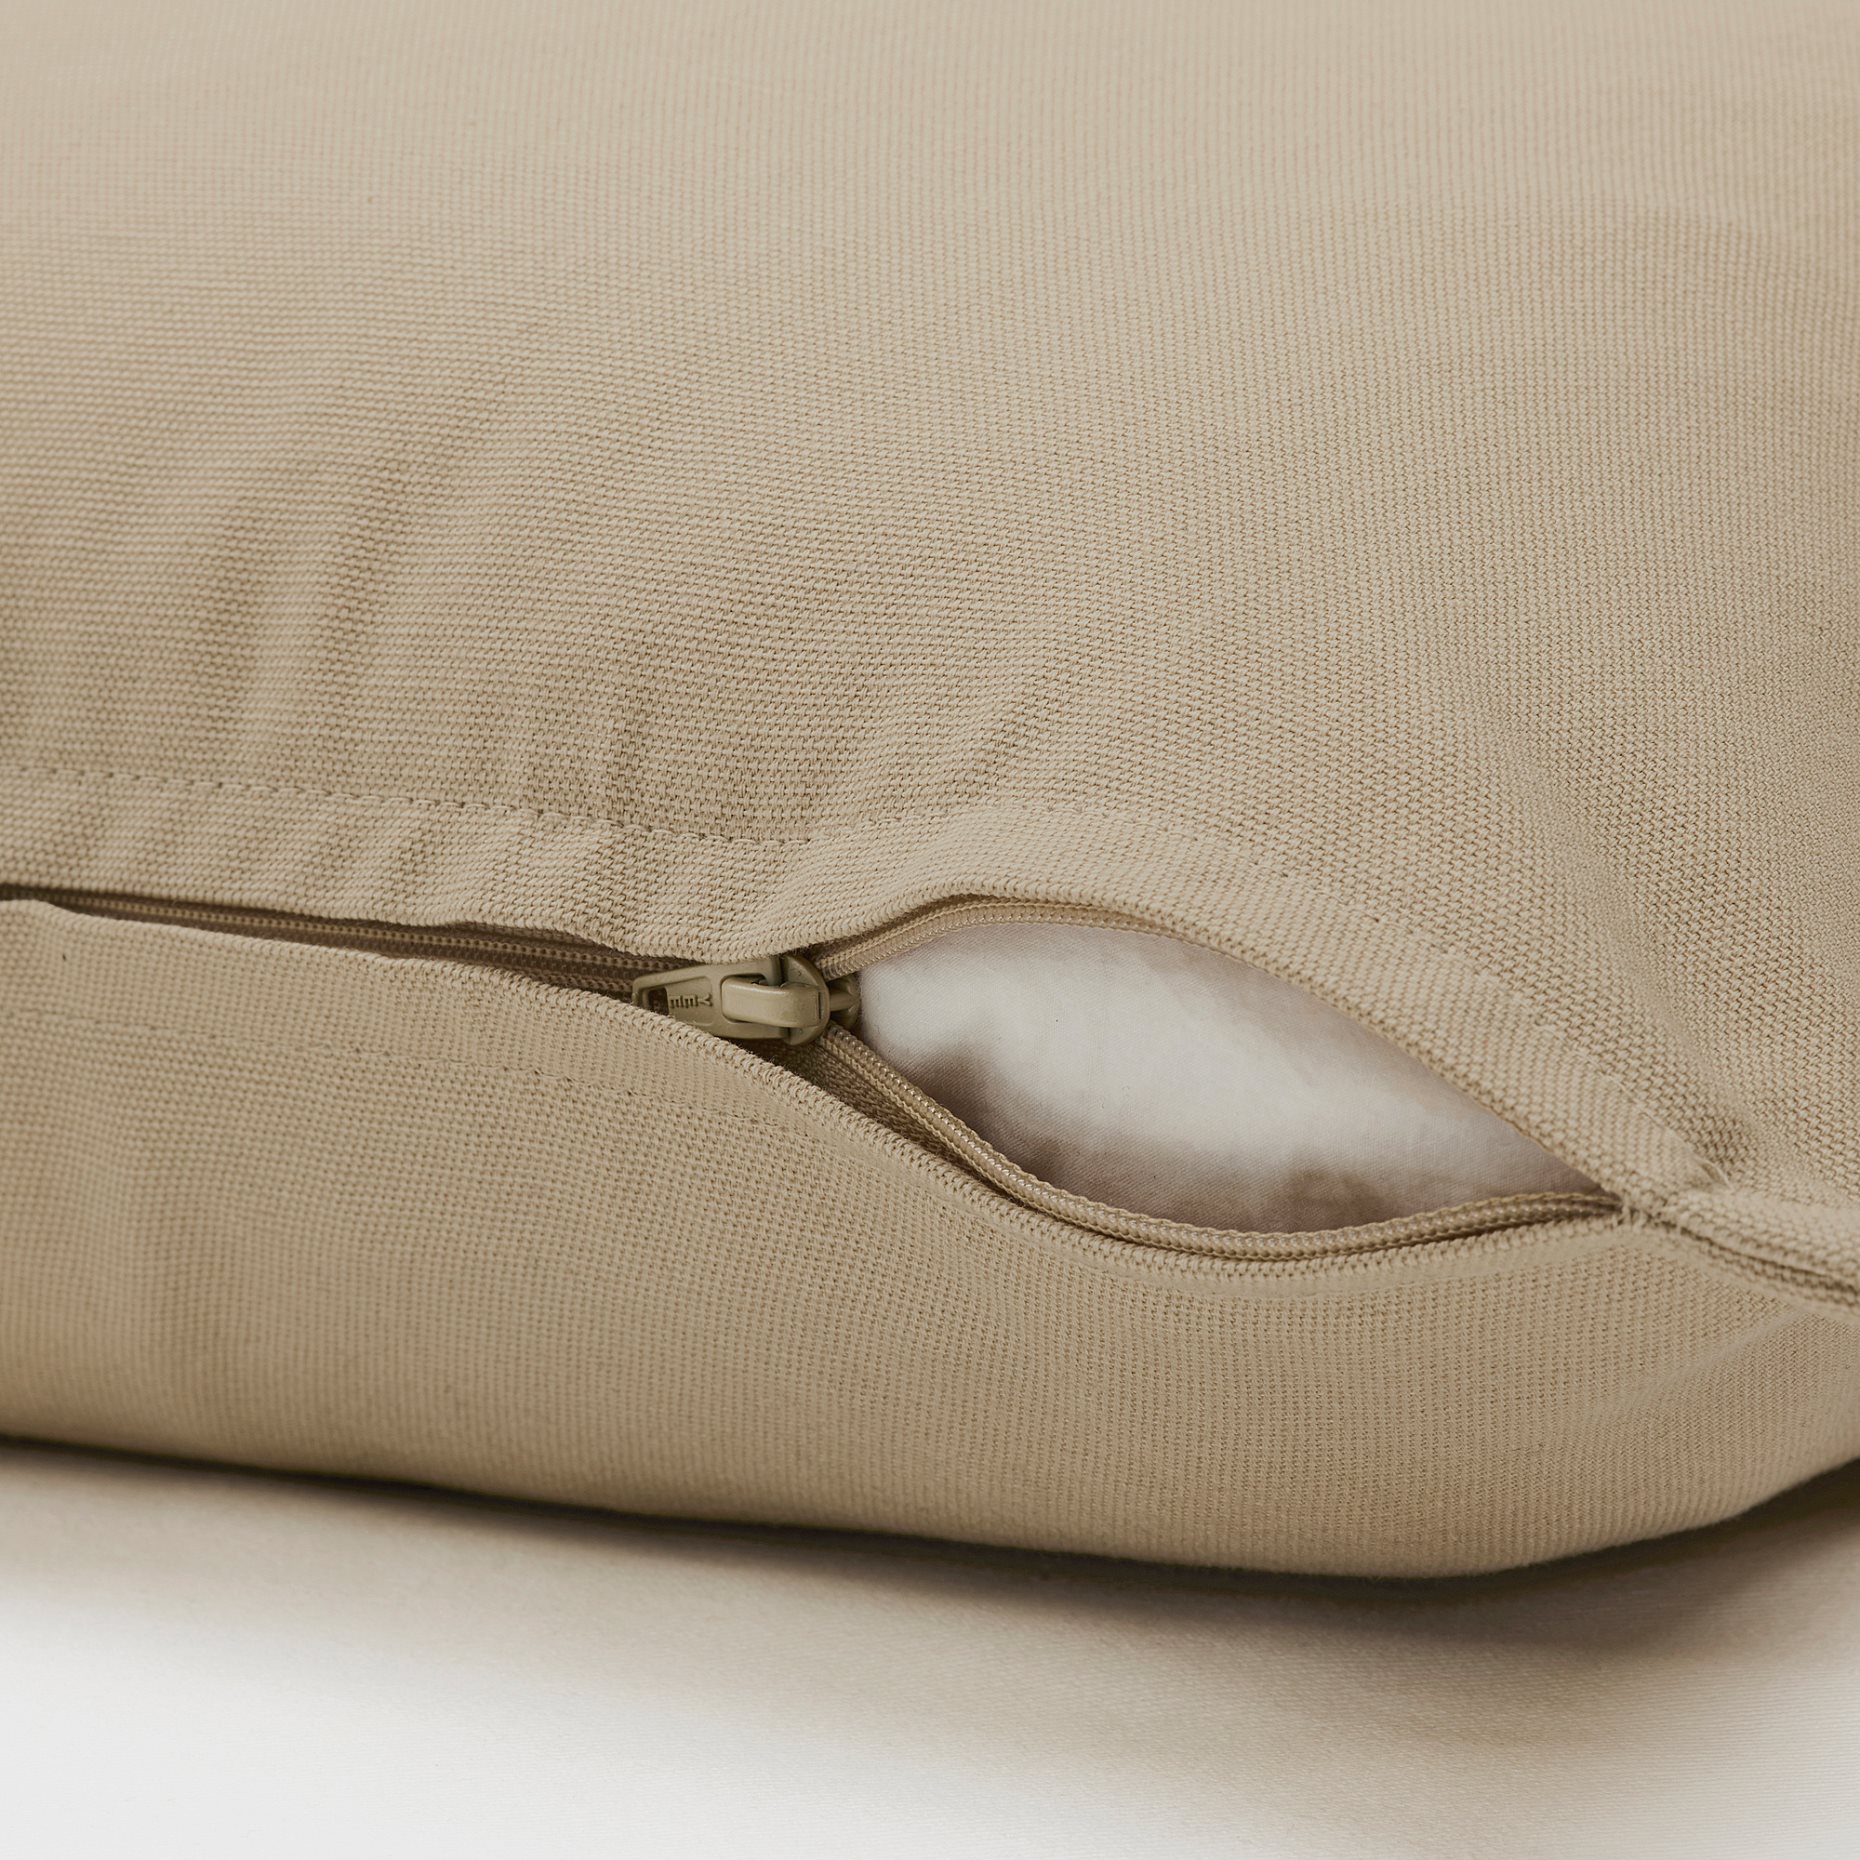 GURLI, cushion cover, 40x58 cm, 805.526.86